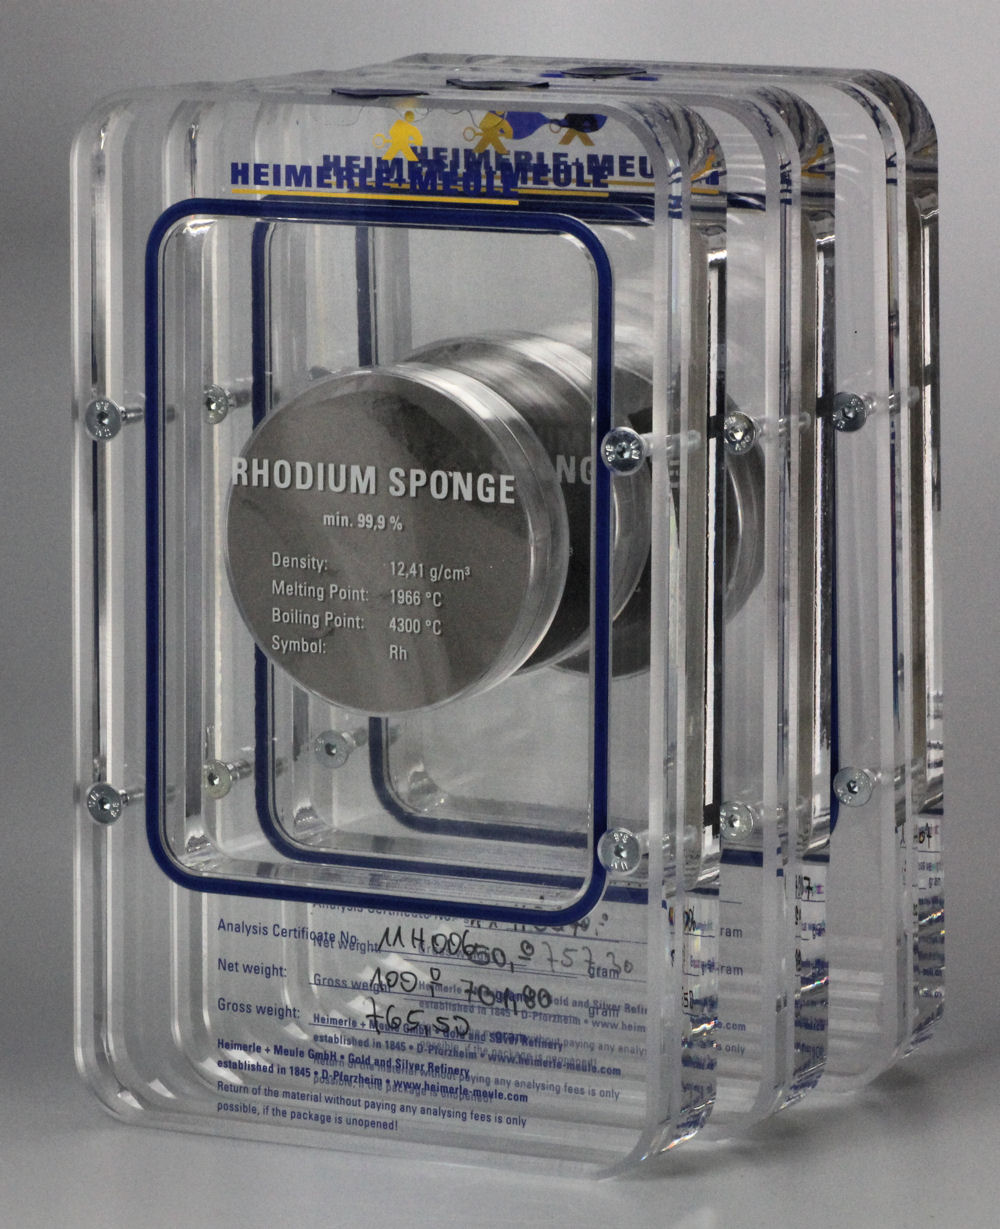 Purchase of rhodium sponge